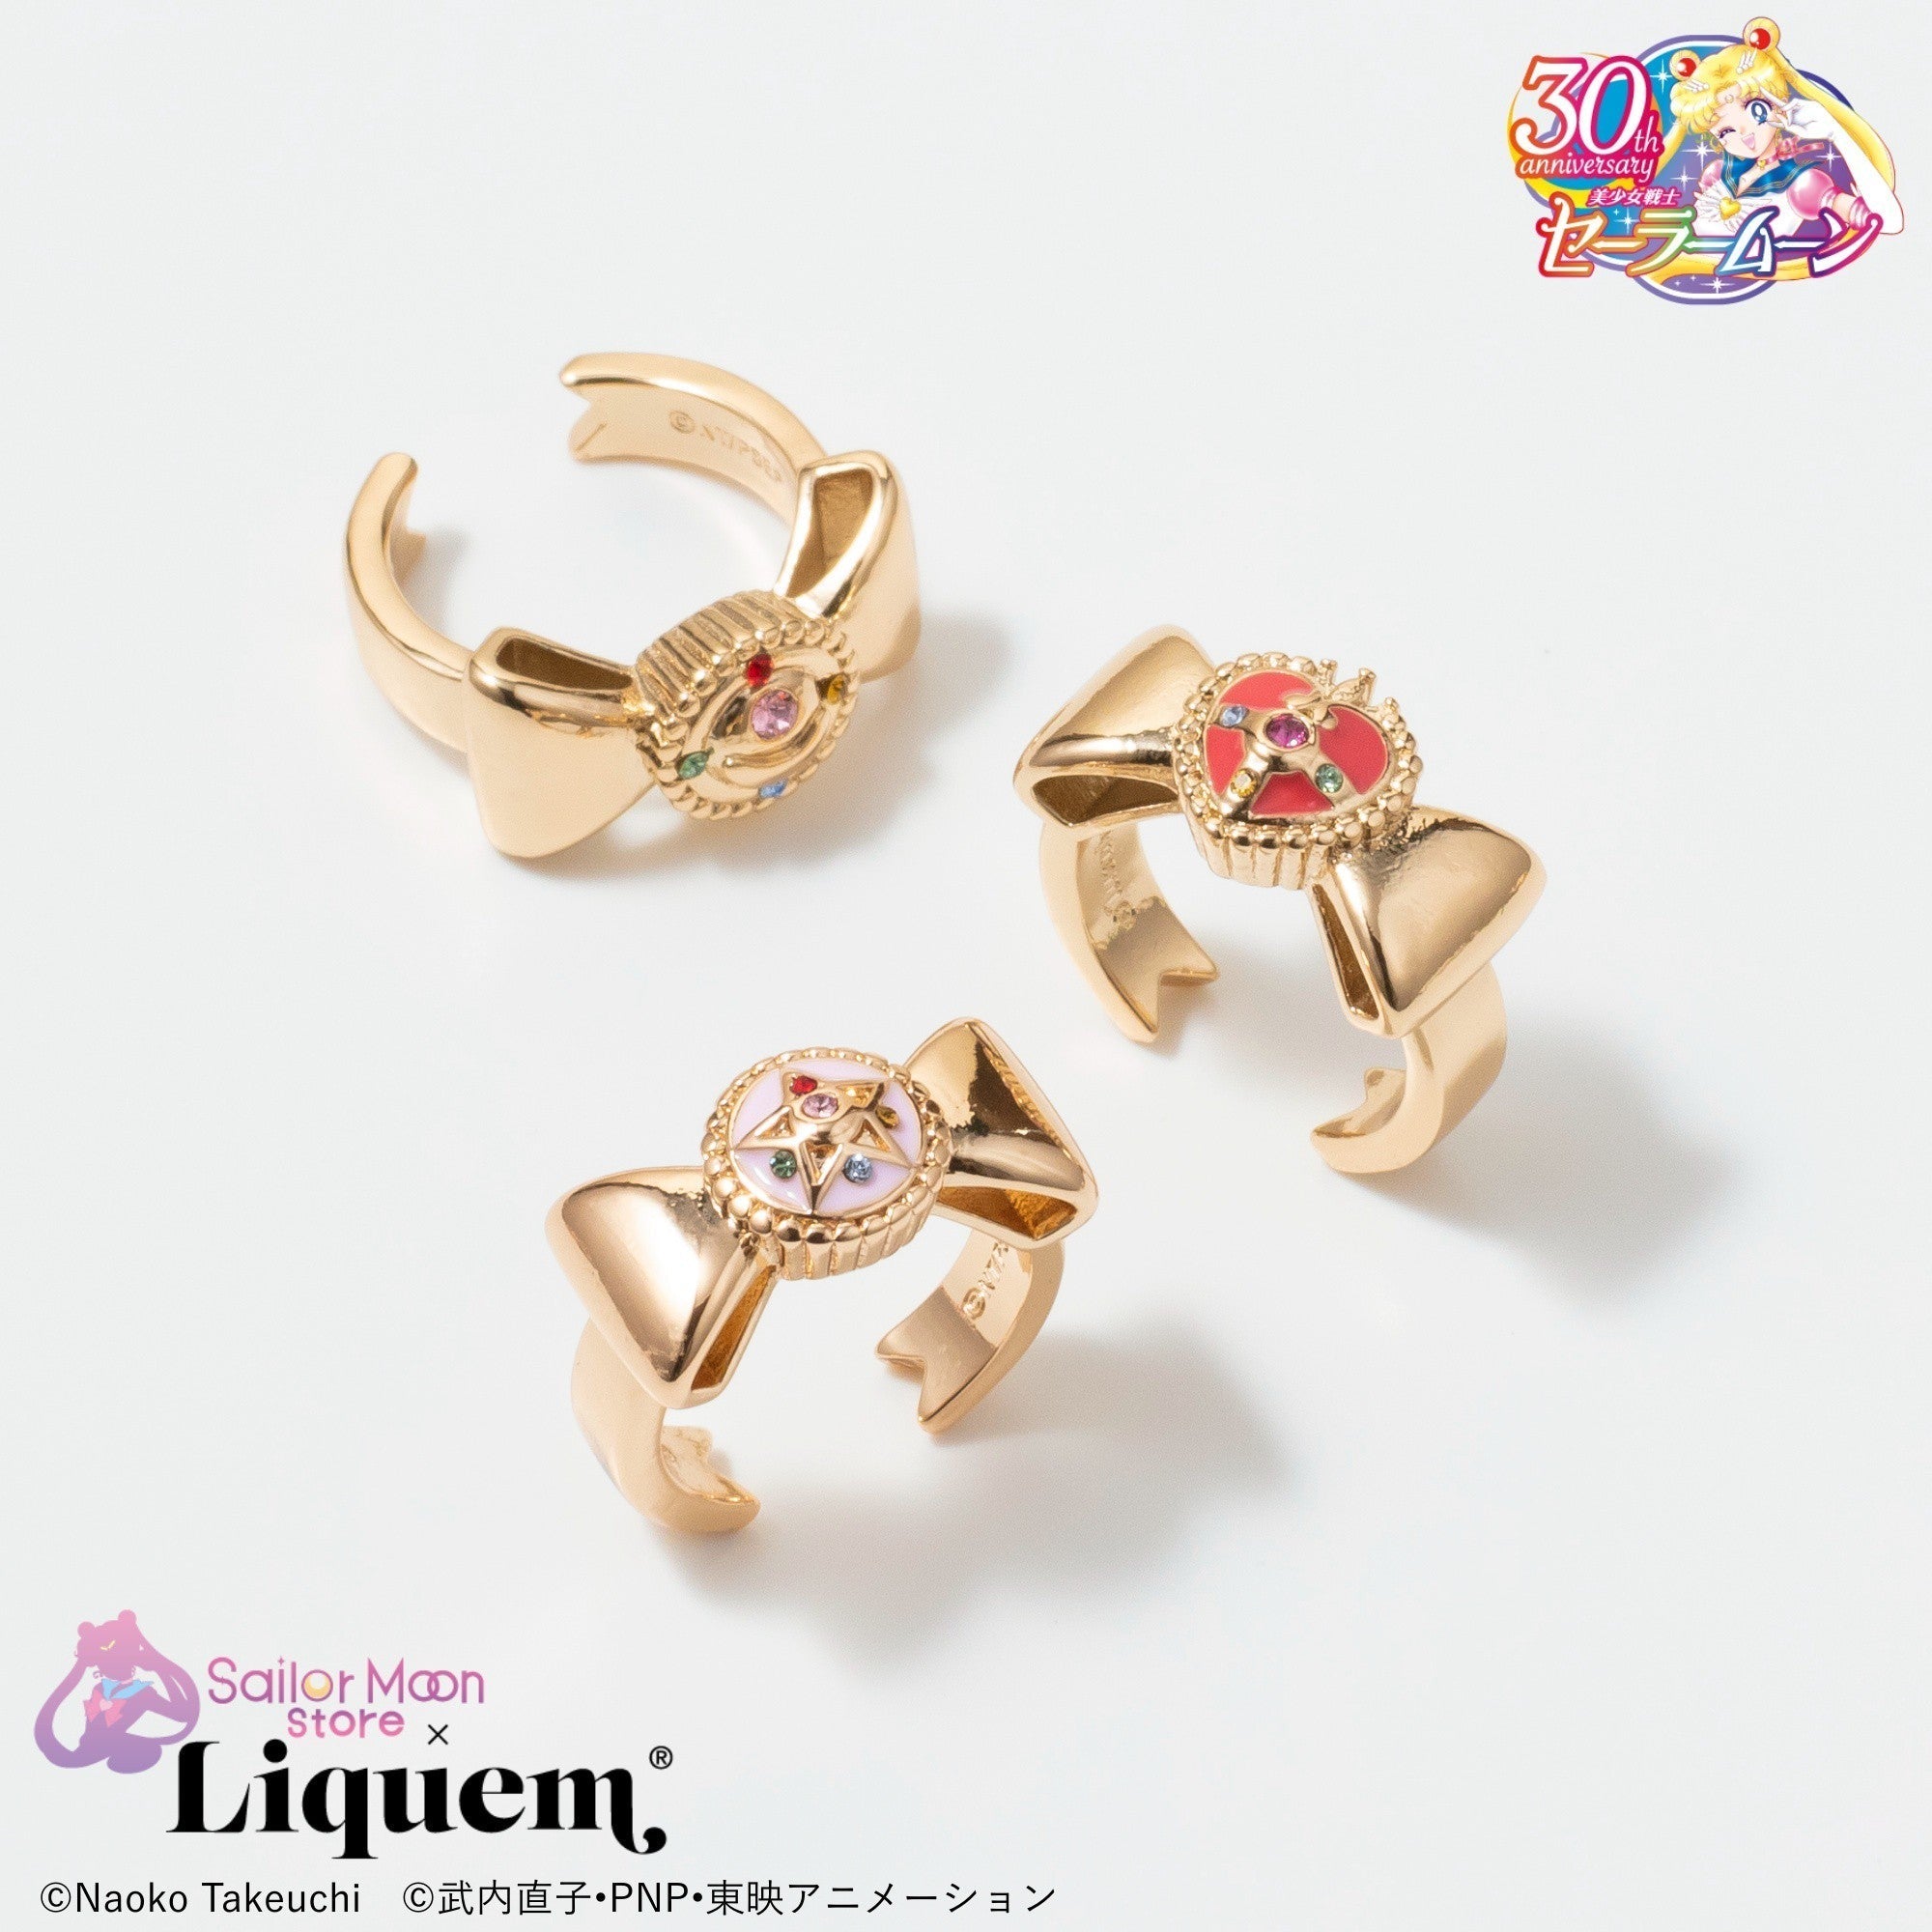 Sailor Moon store x Liquem / 変身ブローチリボンリング